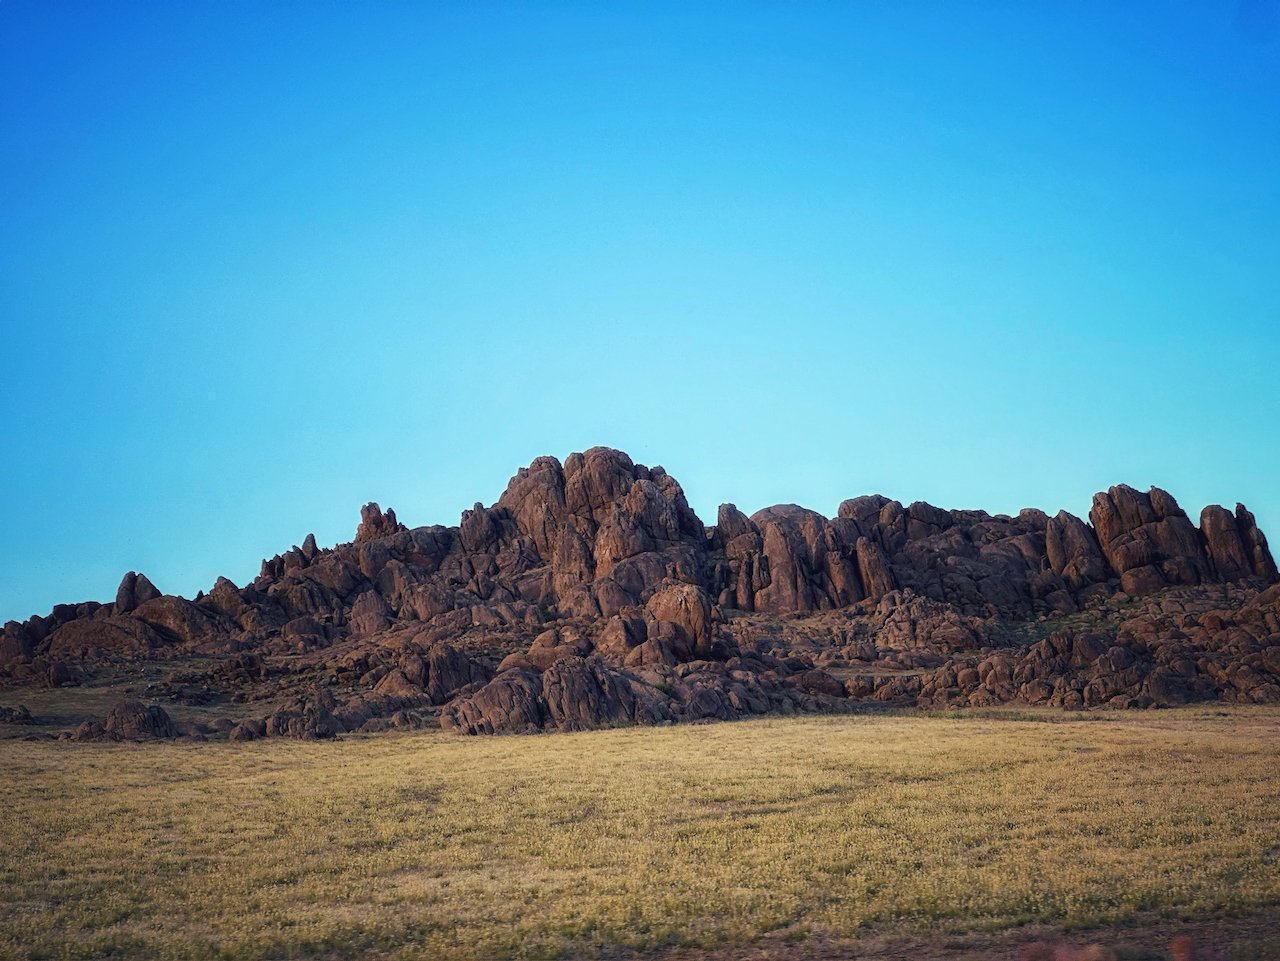 Mongolia Rock Formation.jpeg